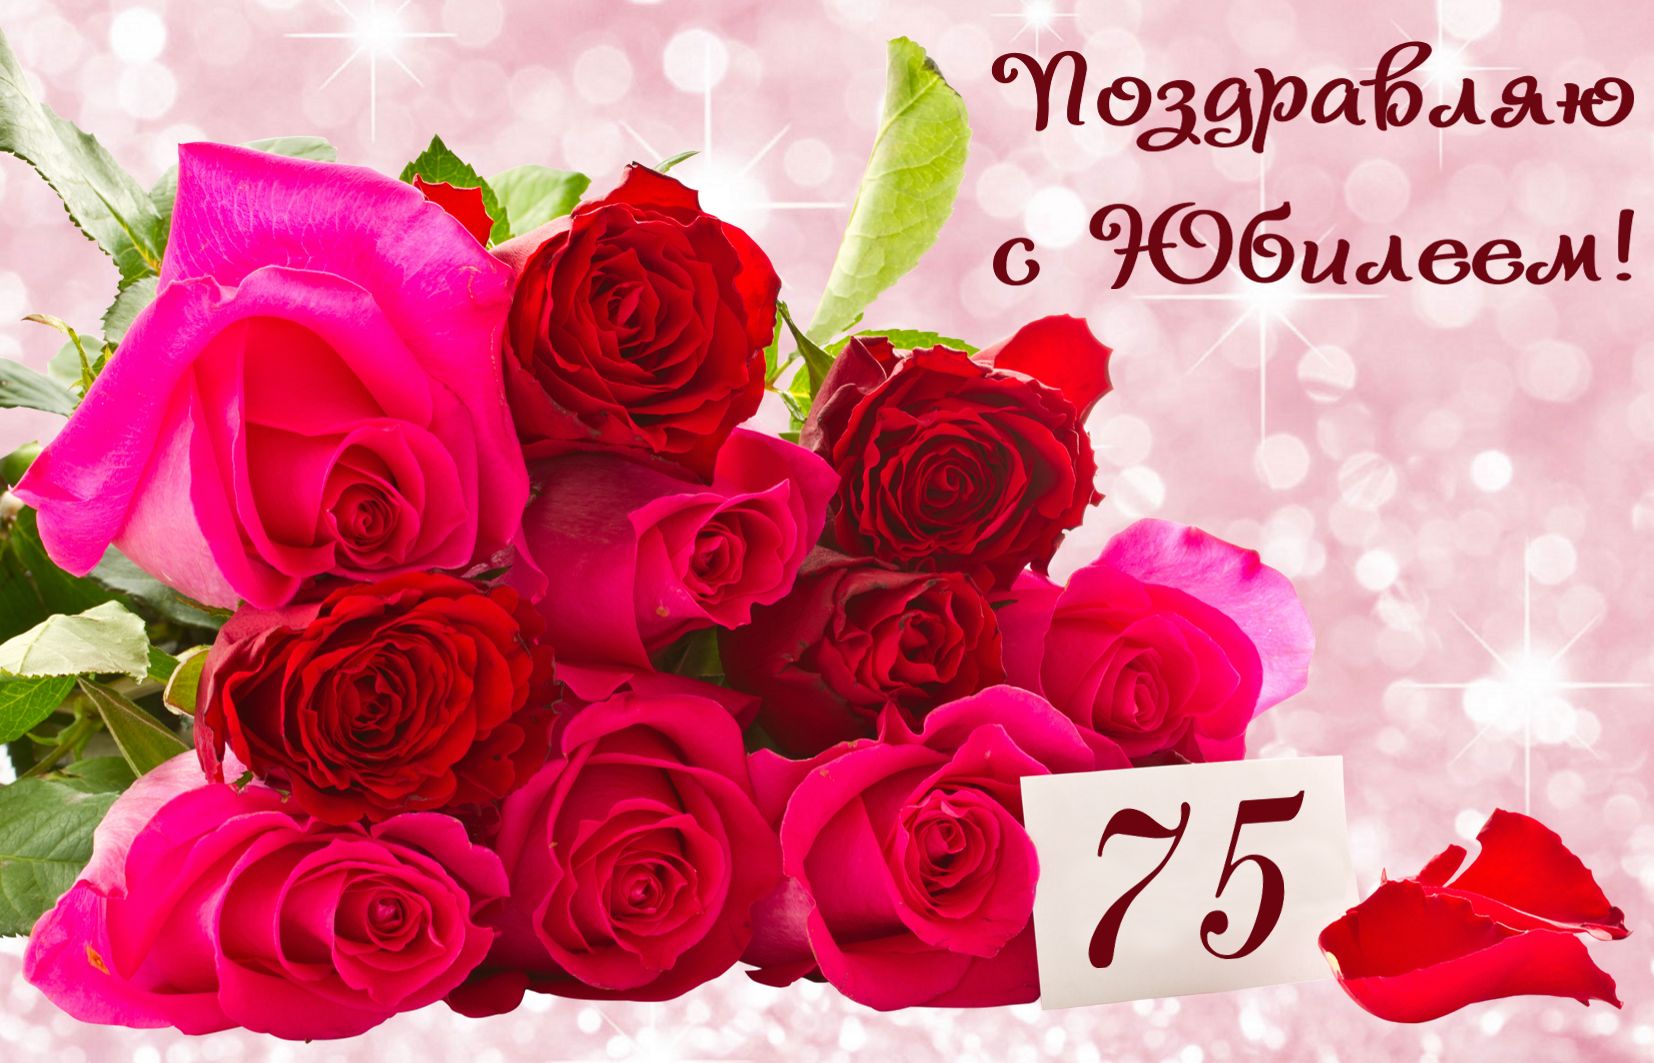 Букет роз на блестящем фоне к юбилею 75 лет